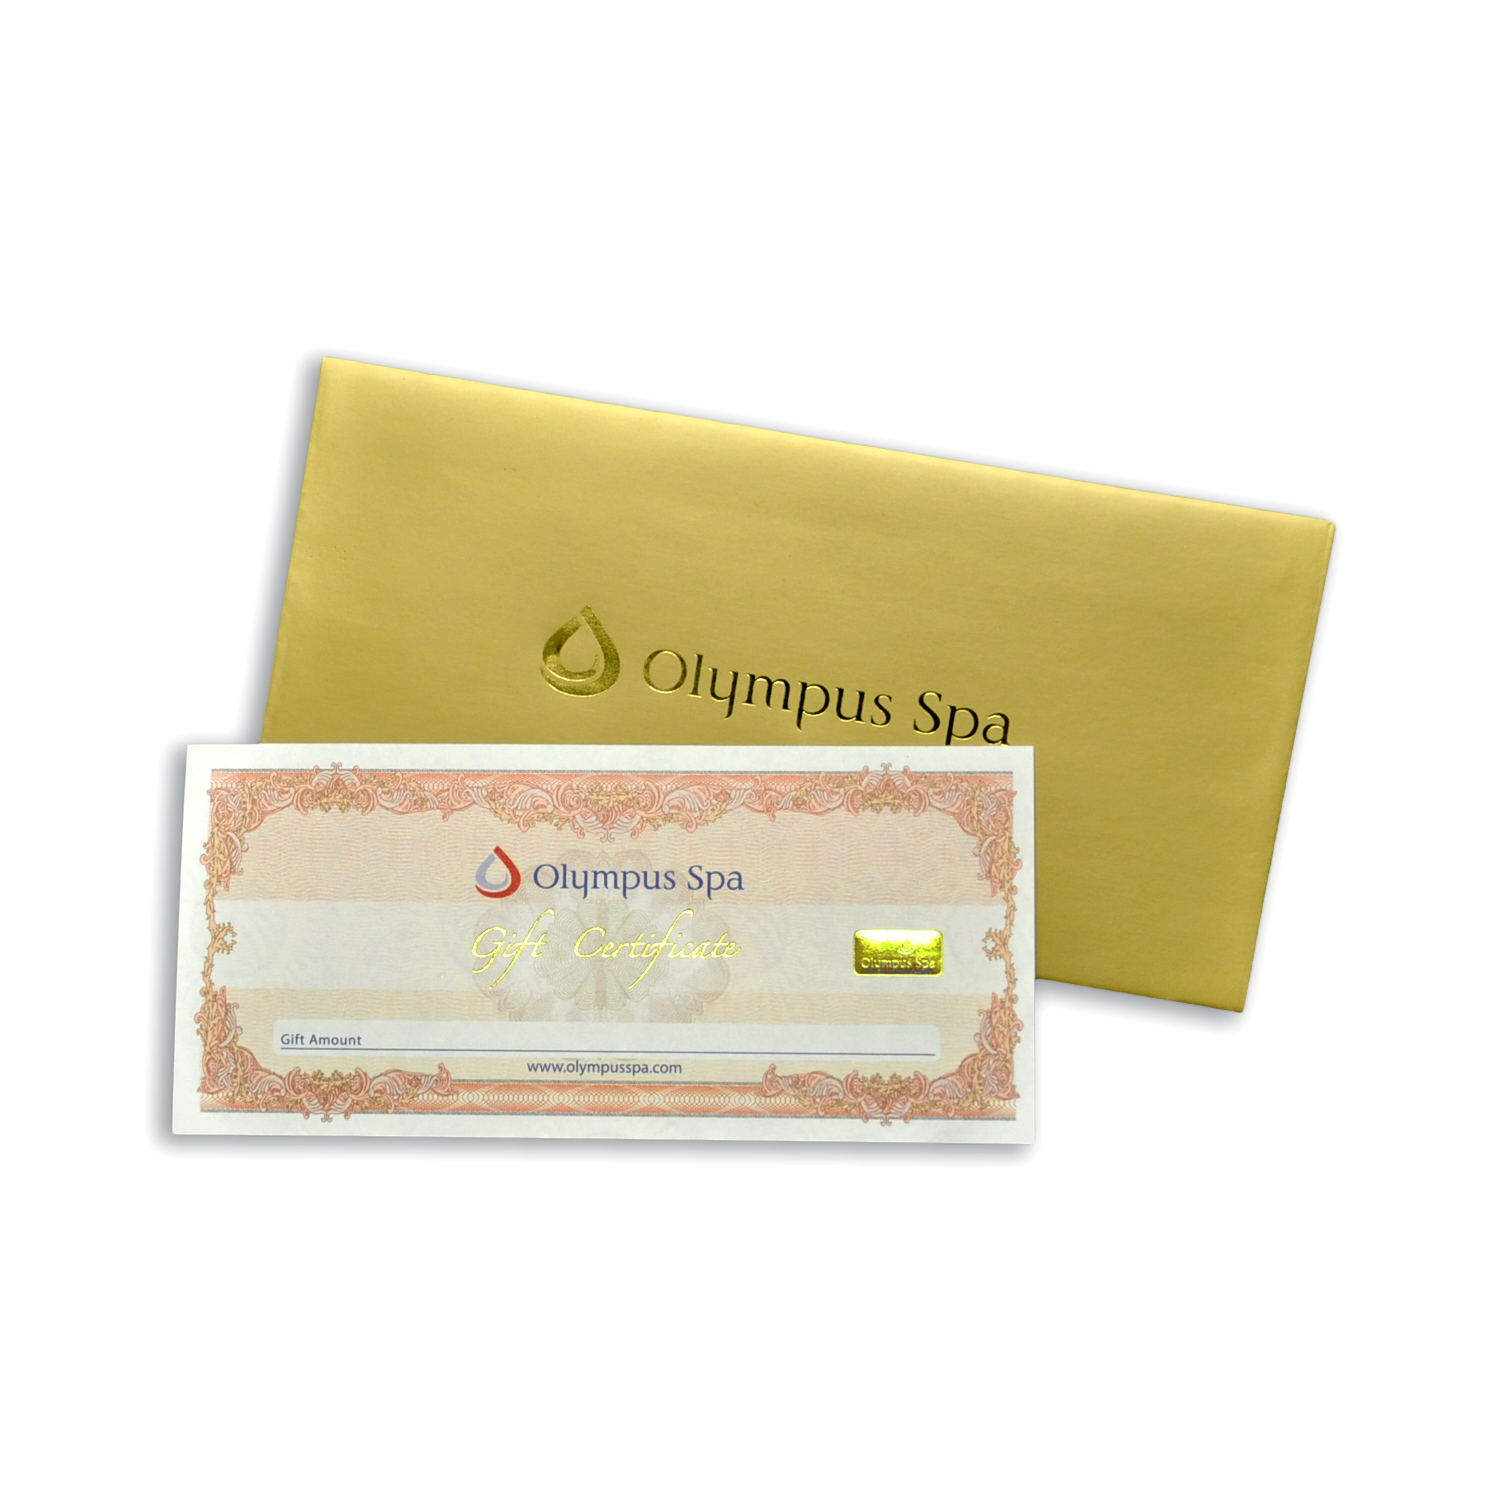 Olympus Spa Gift Certificate